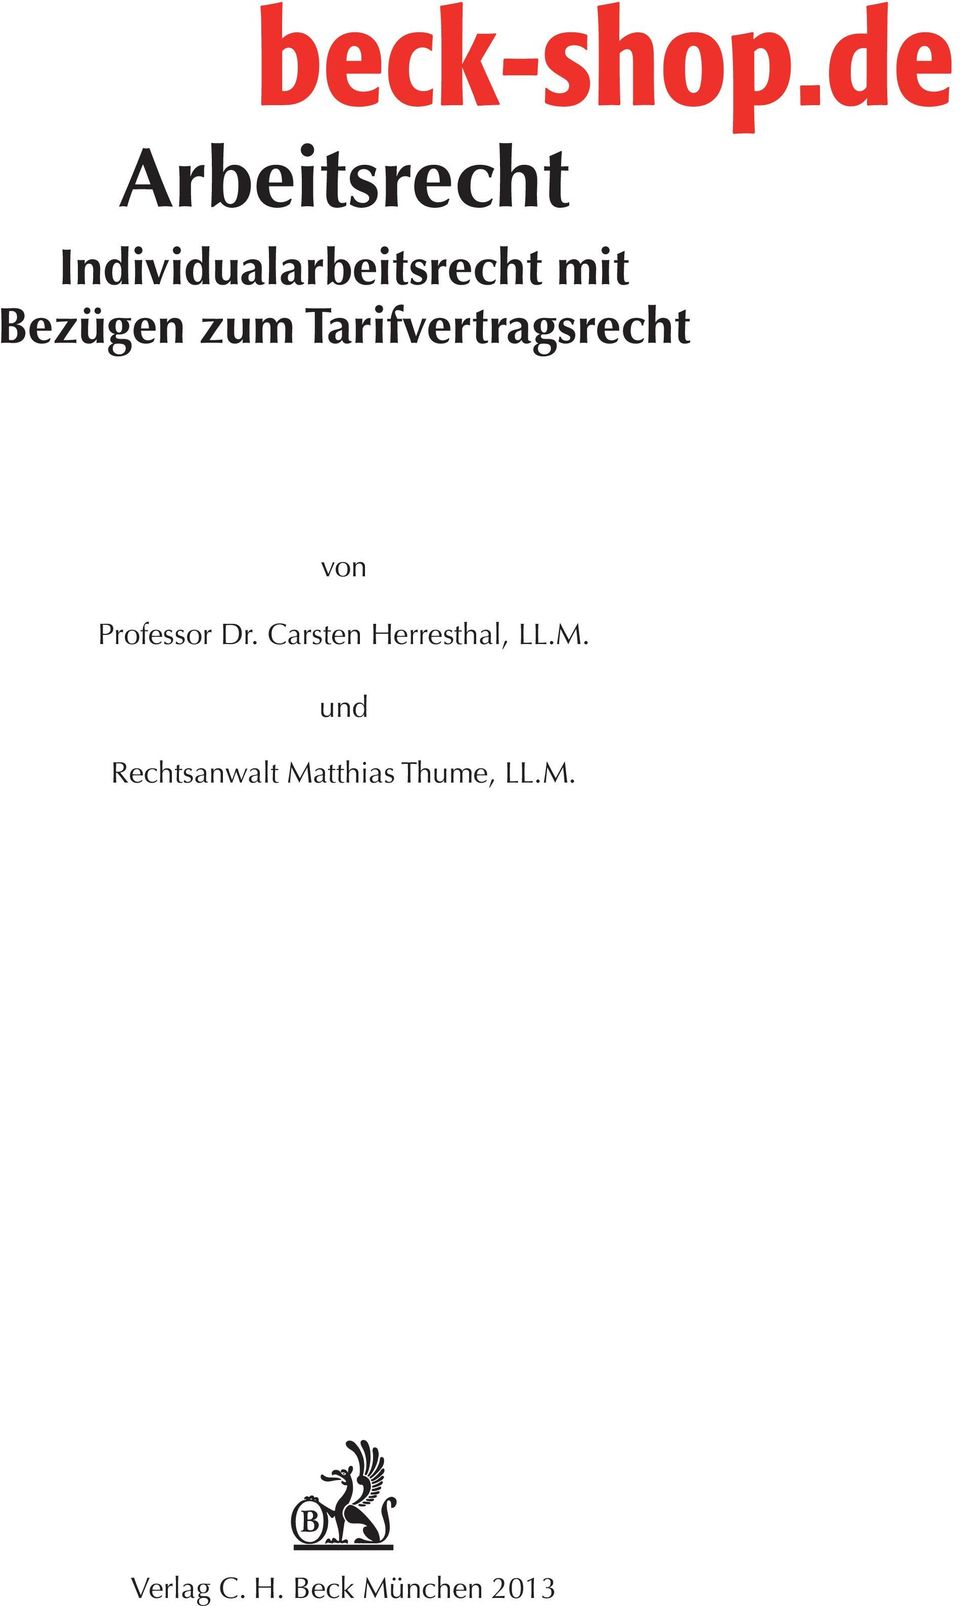 Dr. Carsten Herresthal, LL.M.